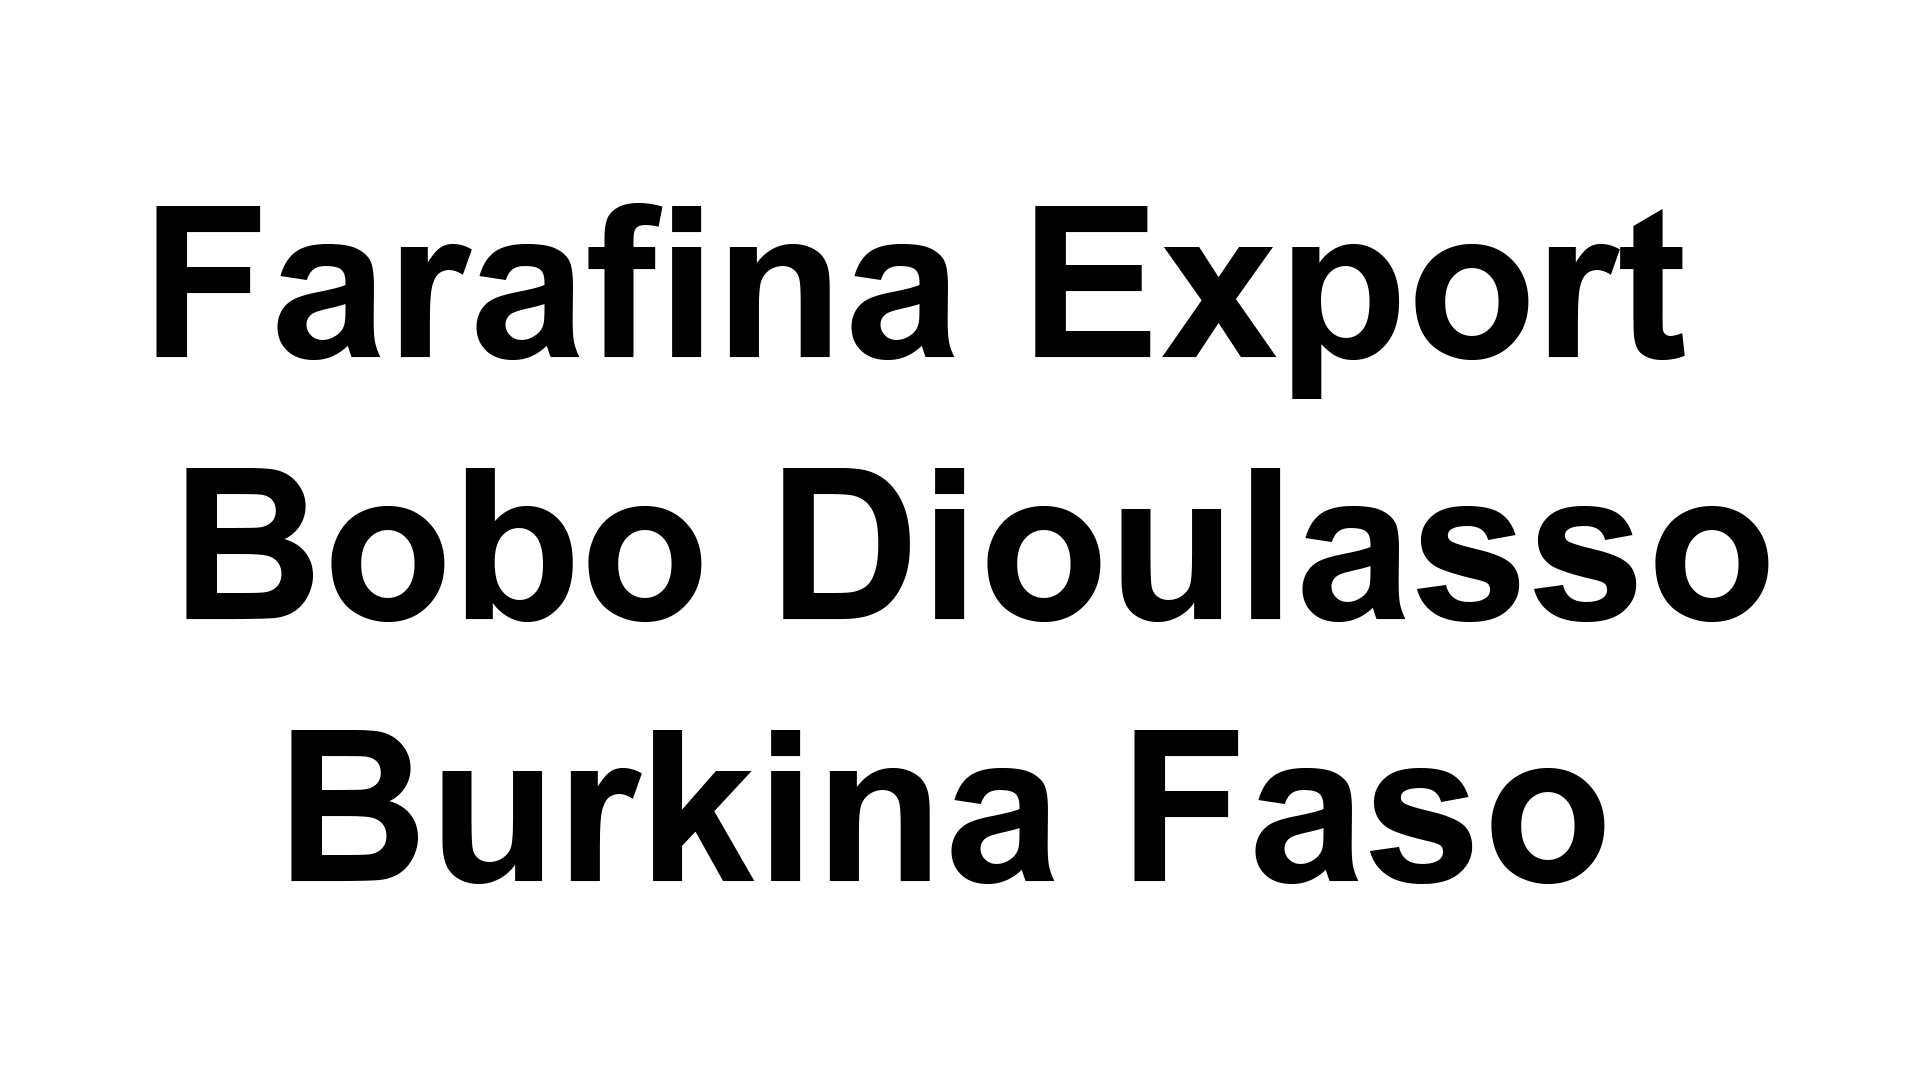 Farafina Export – Bobo Dioulasso-Burkina Faso